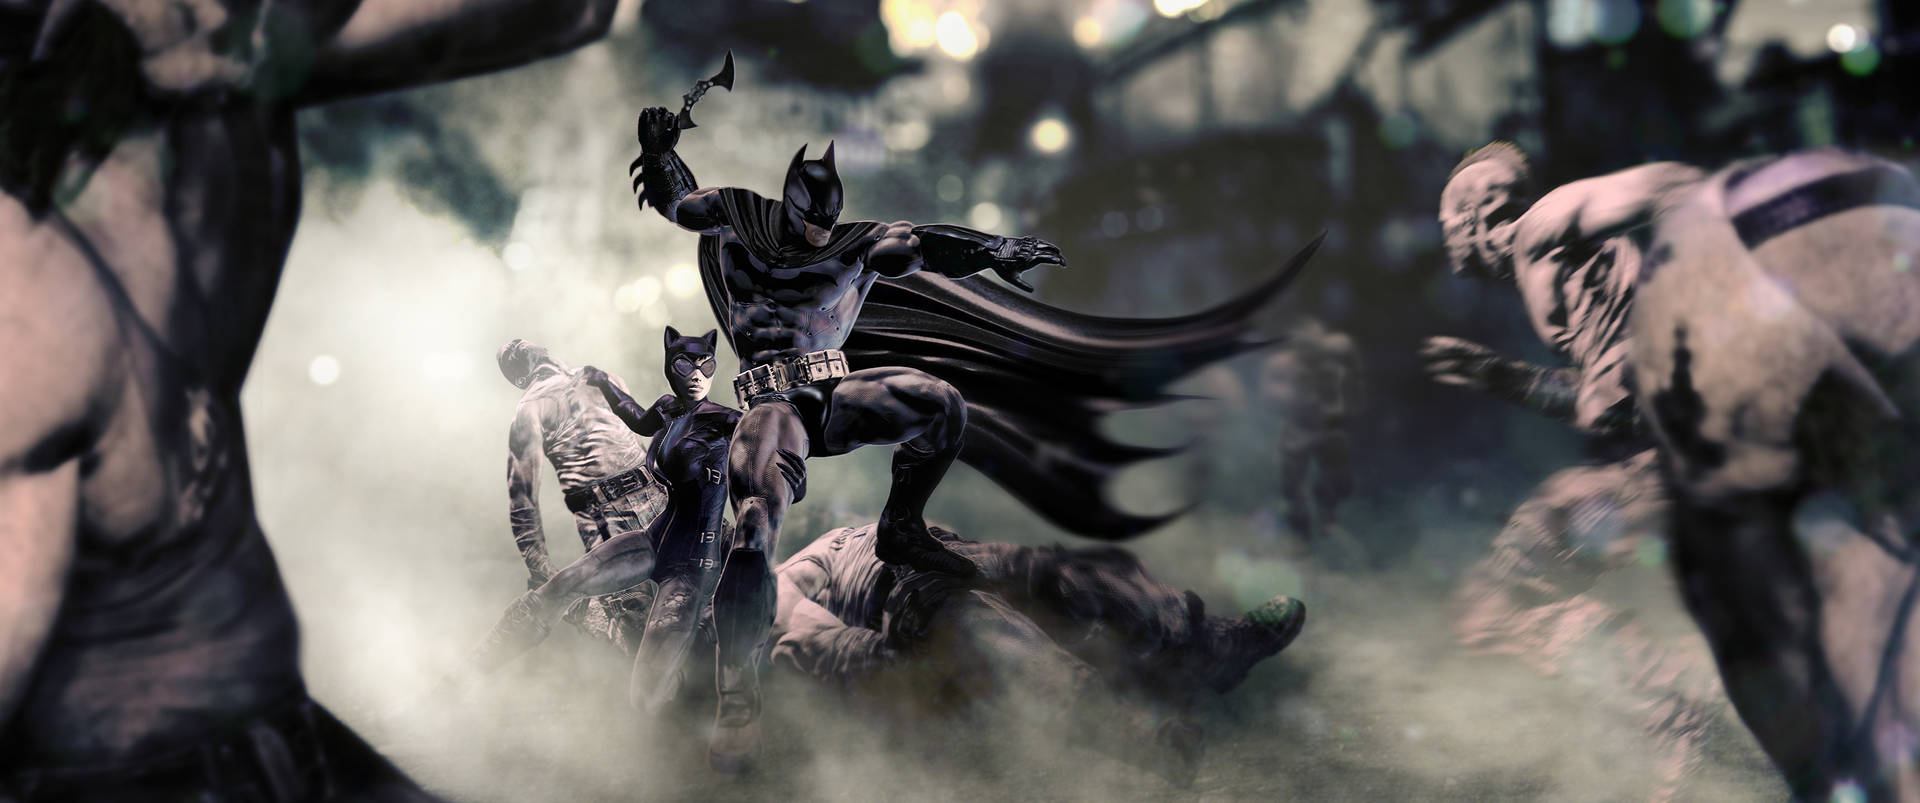 Batman Arkham City Fighting Enemies Wallpaper